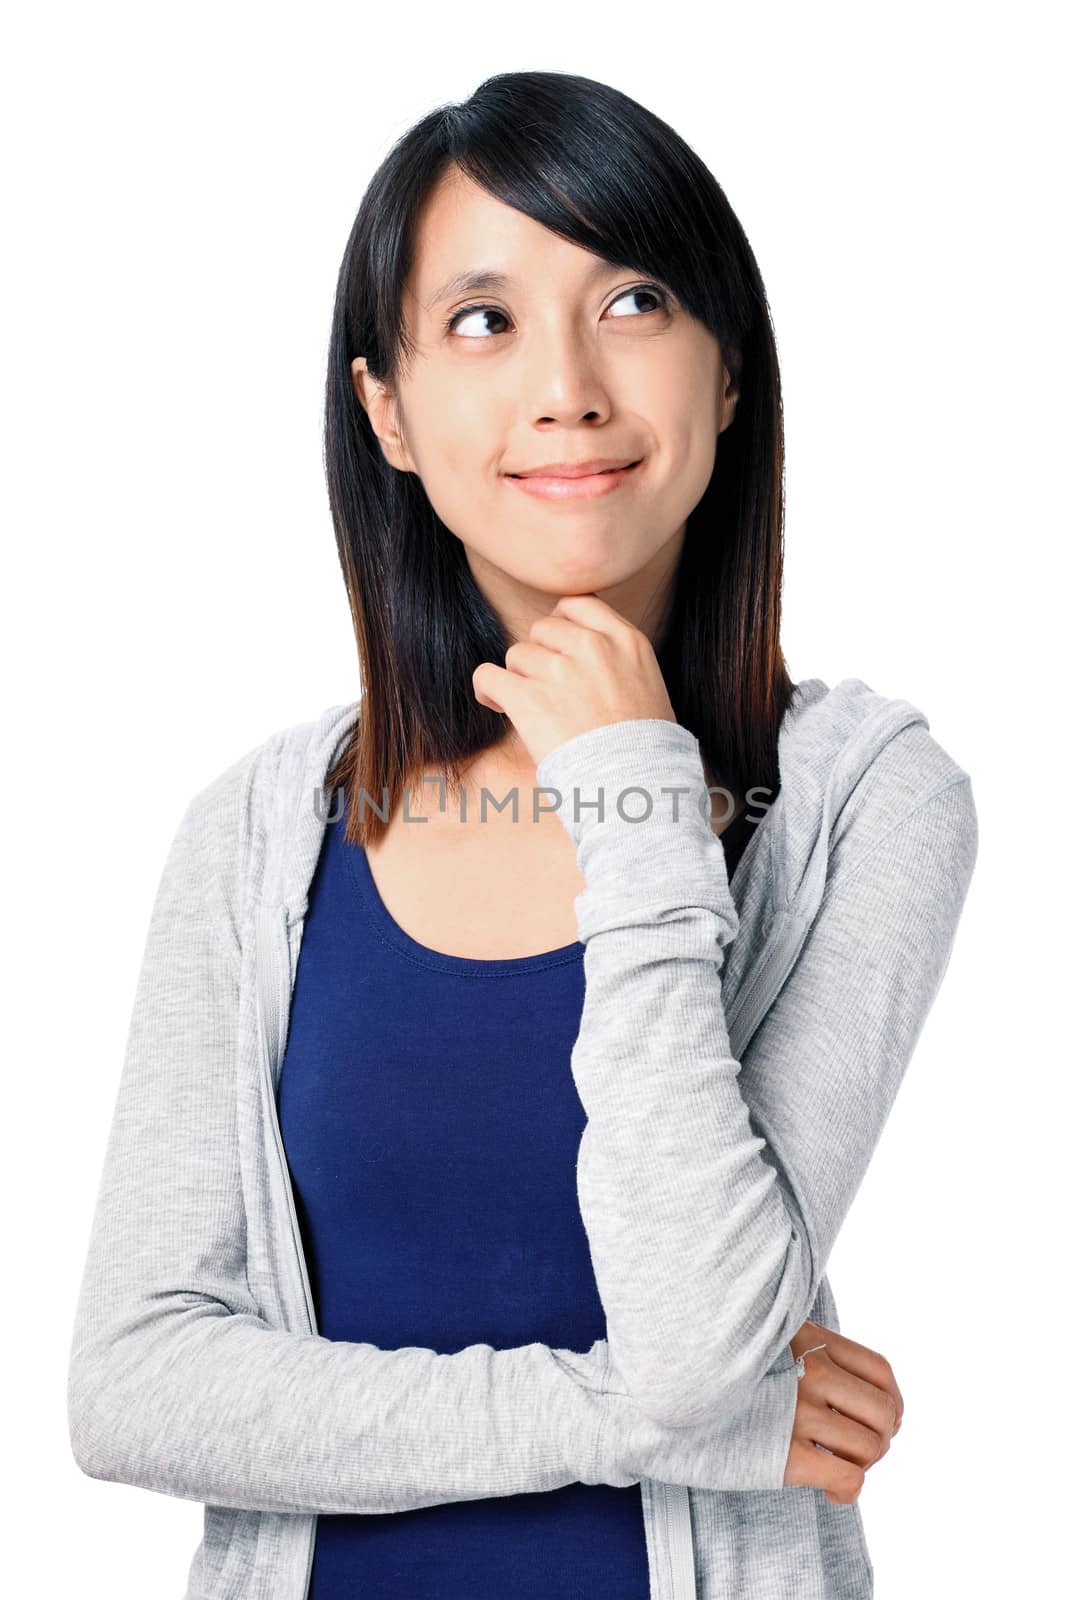 Thoughtful woman by leungchopan